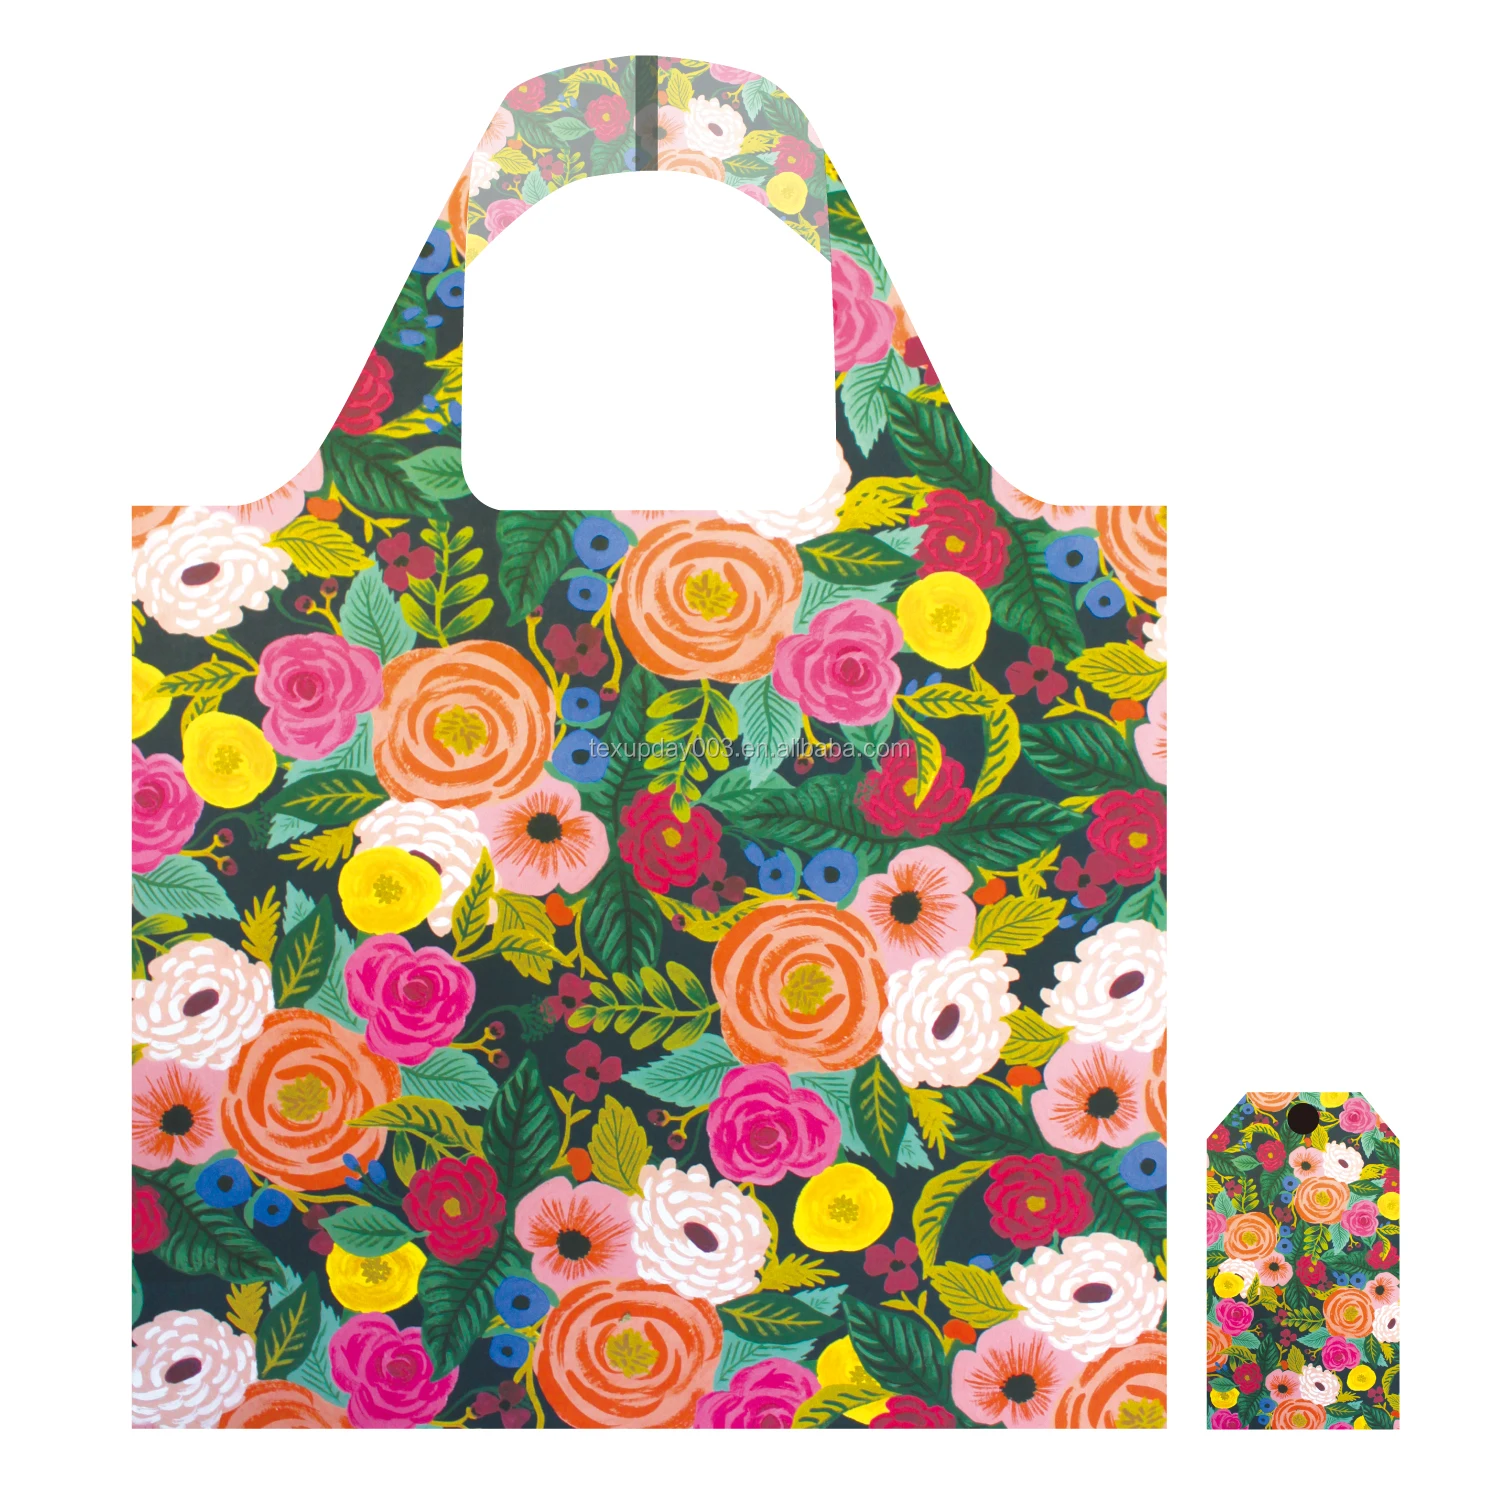 Personalised Folding Big Reusable Grocery Shopping Bag - Buy Reusable ...